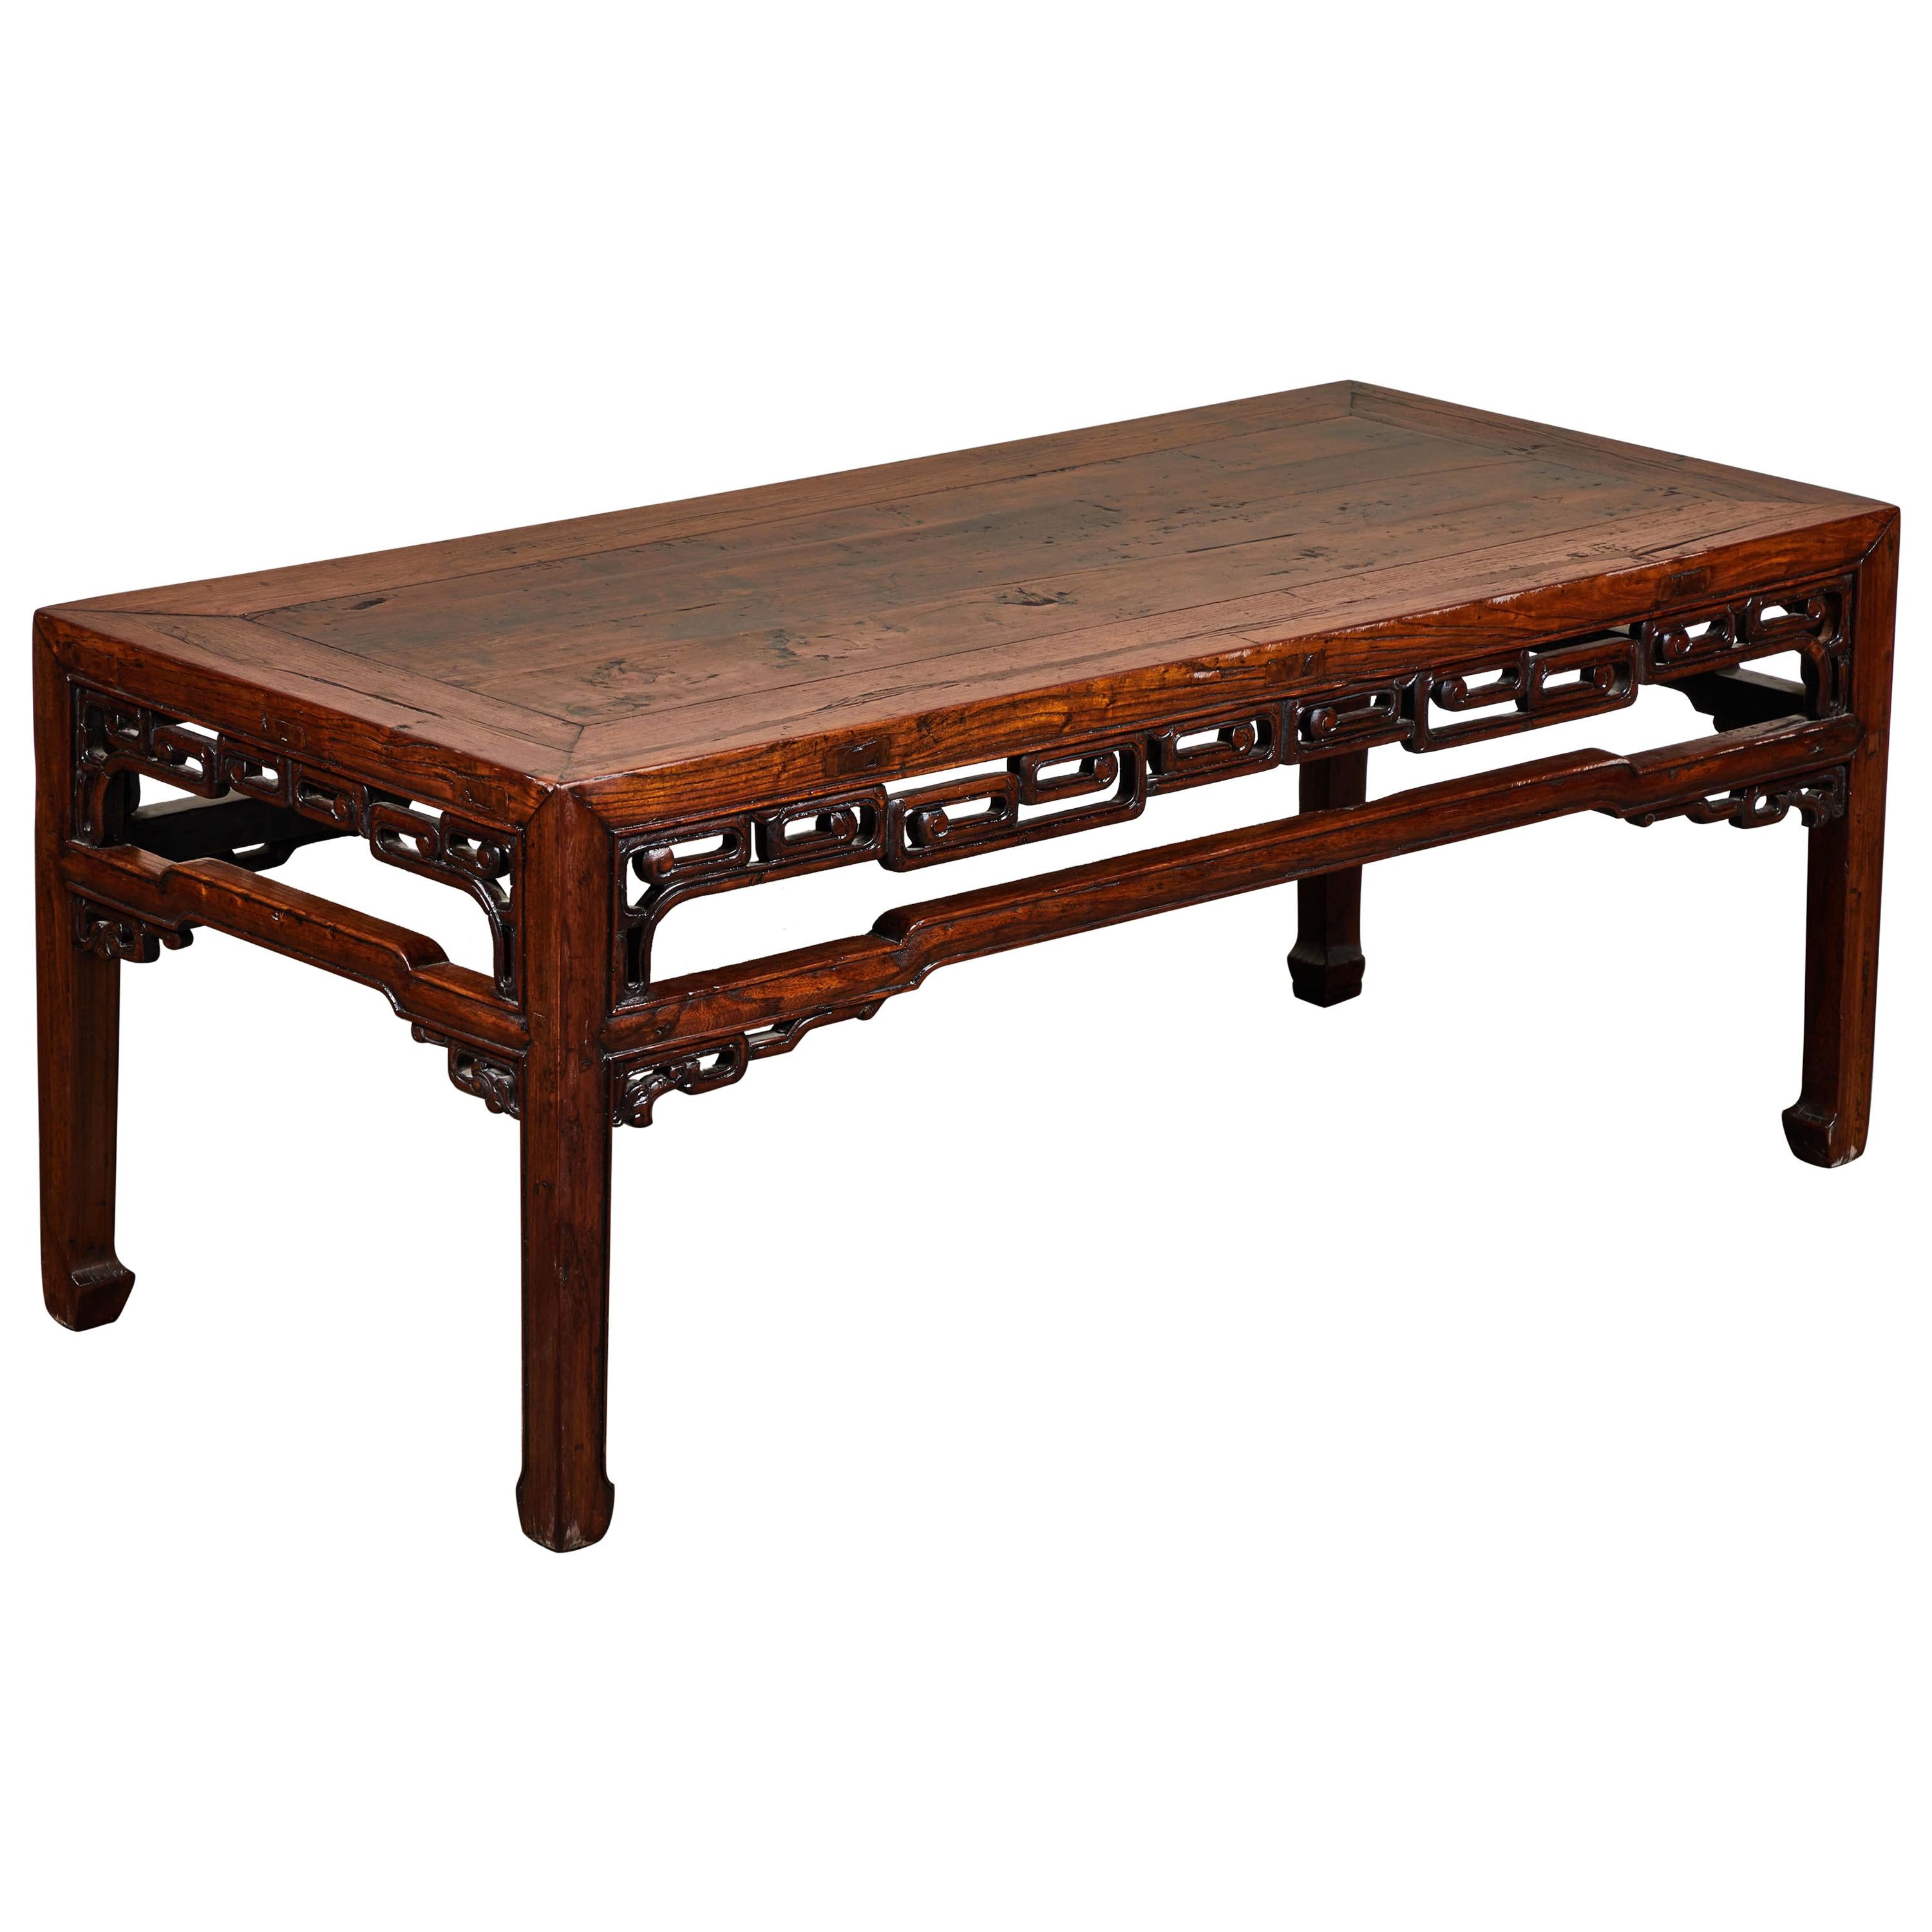 18th Century Chinese Kang Table